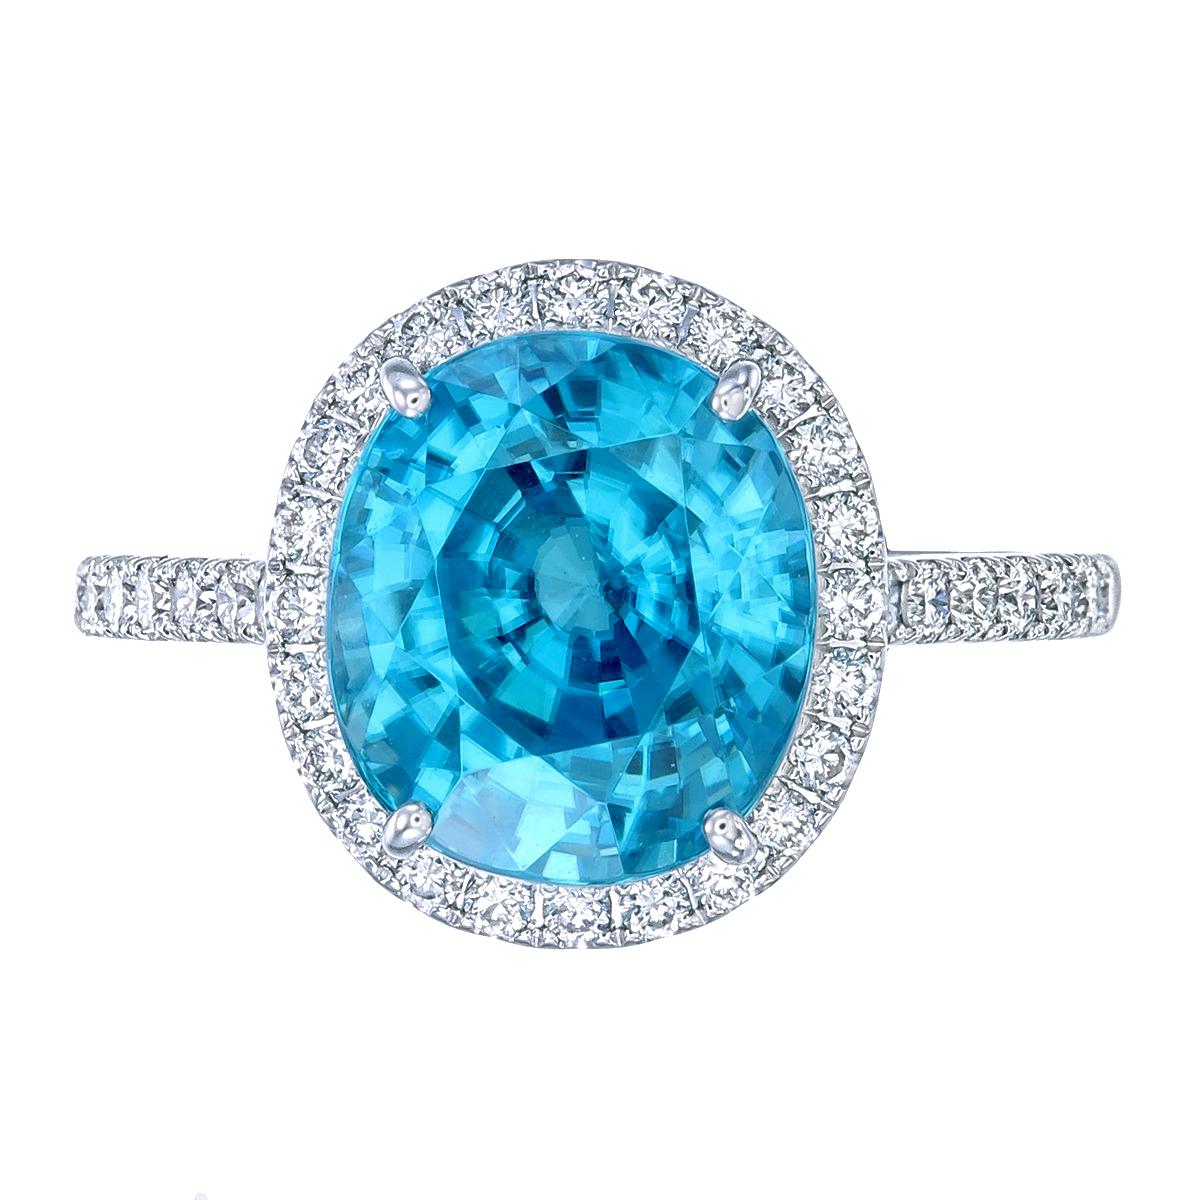 Contemporary Orloff of Denmark, 6.41 ct Blue Zircon Diamond Engagement Ring in 14K White Gold